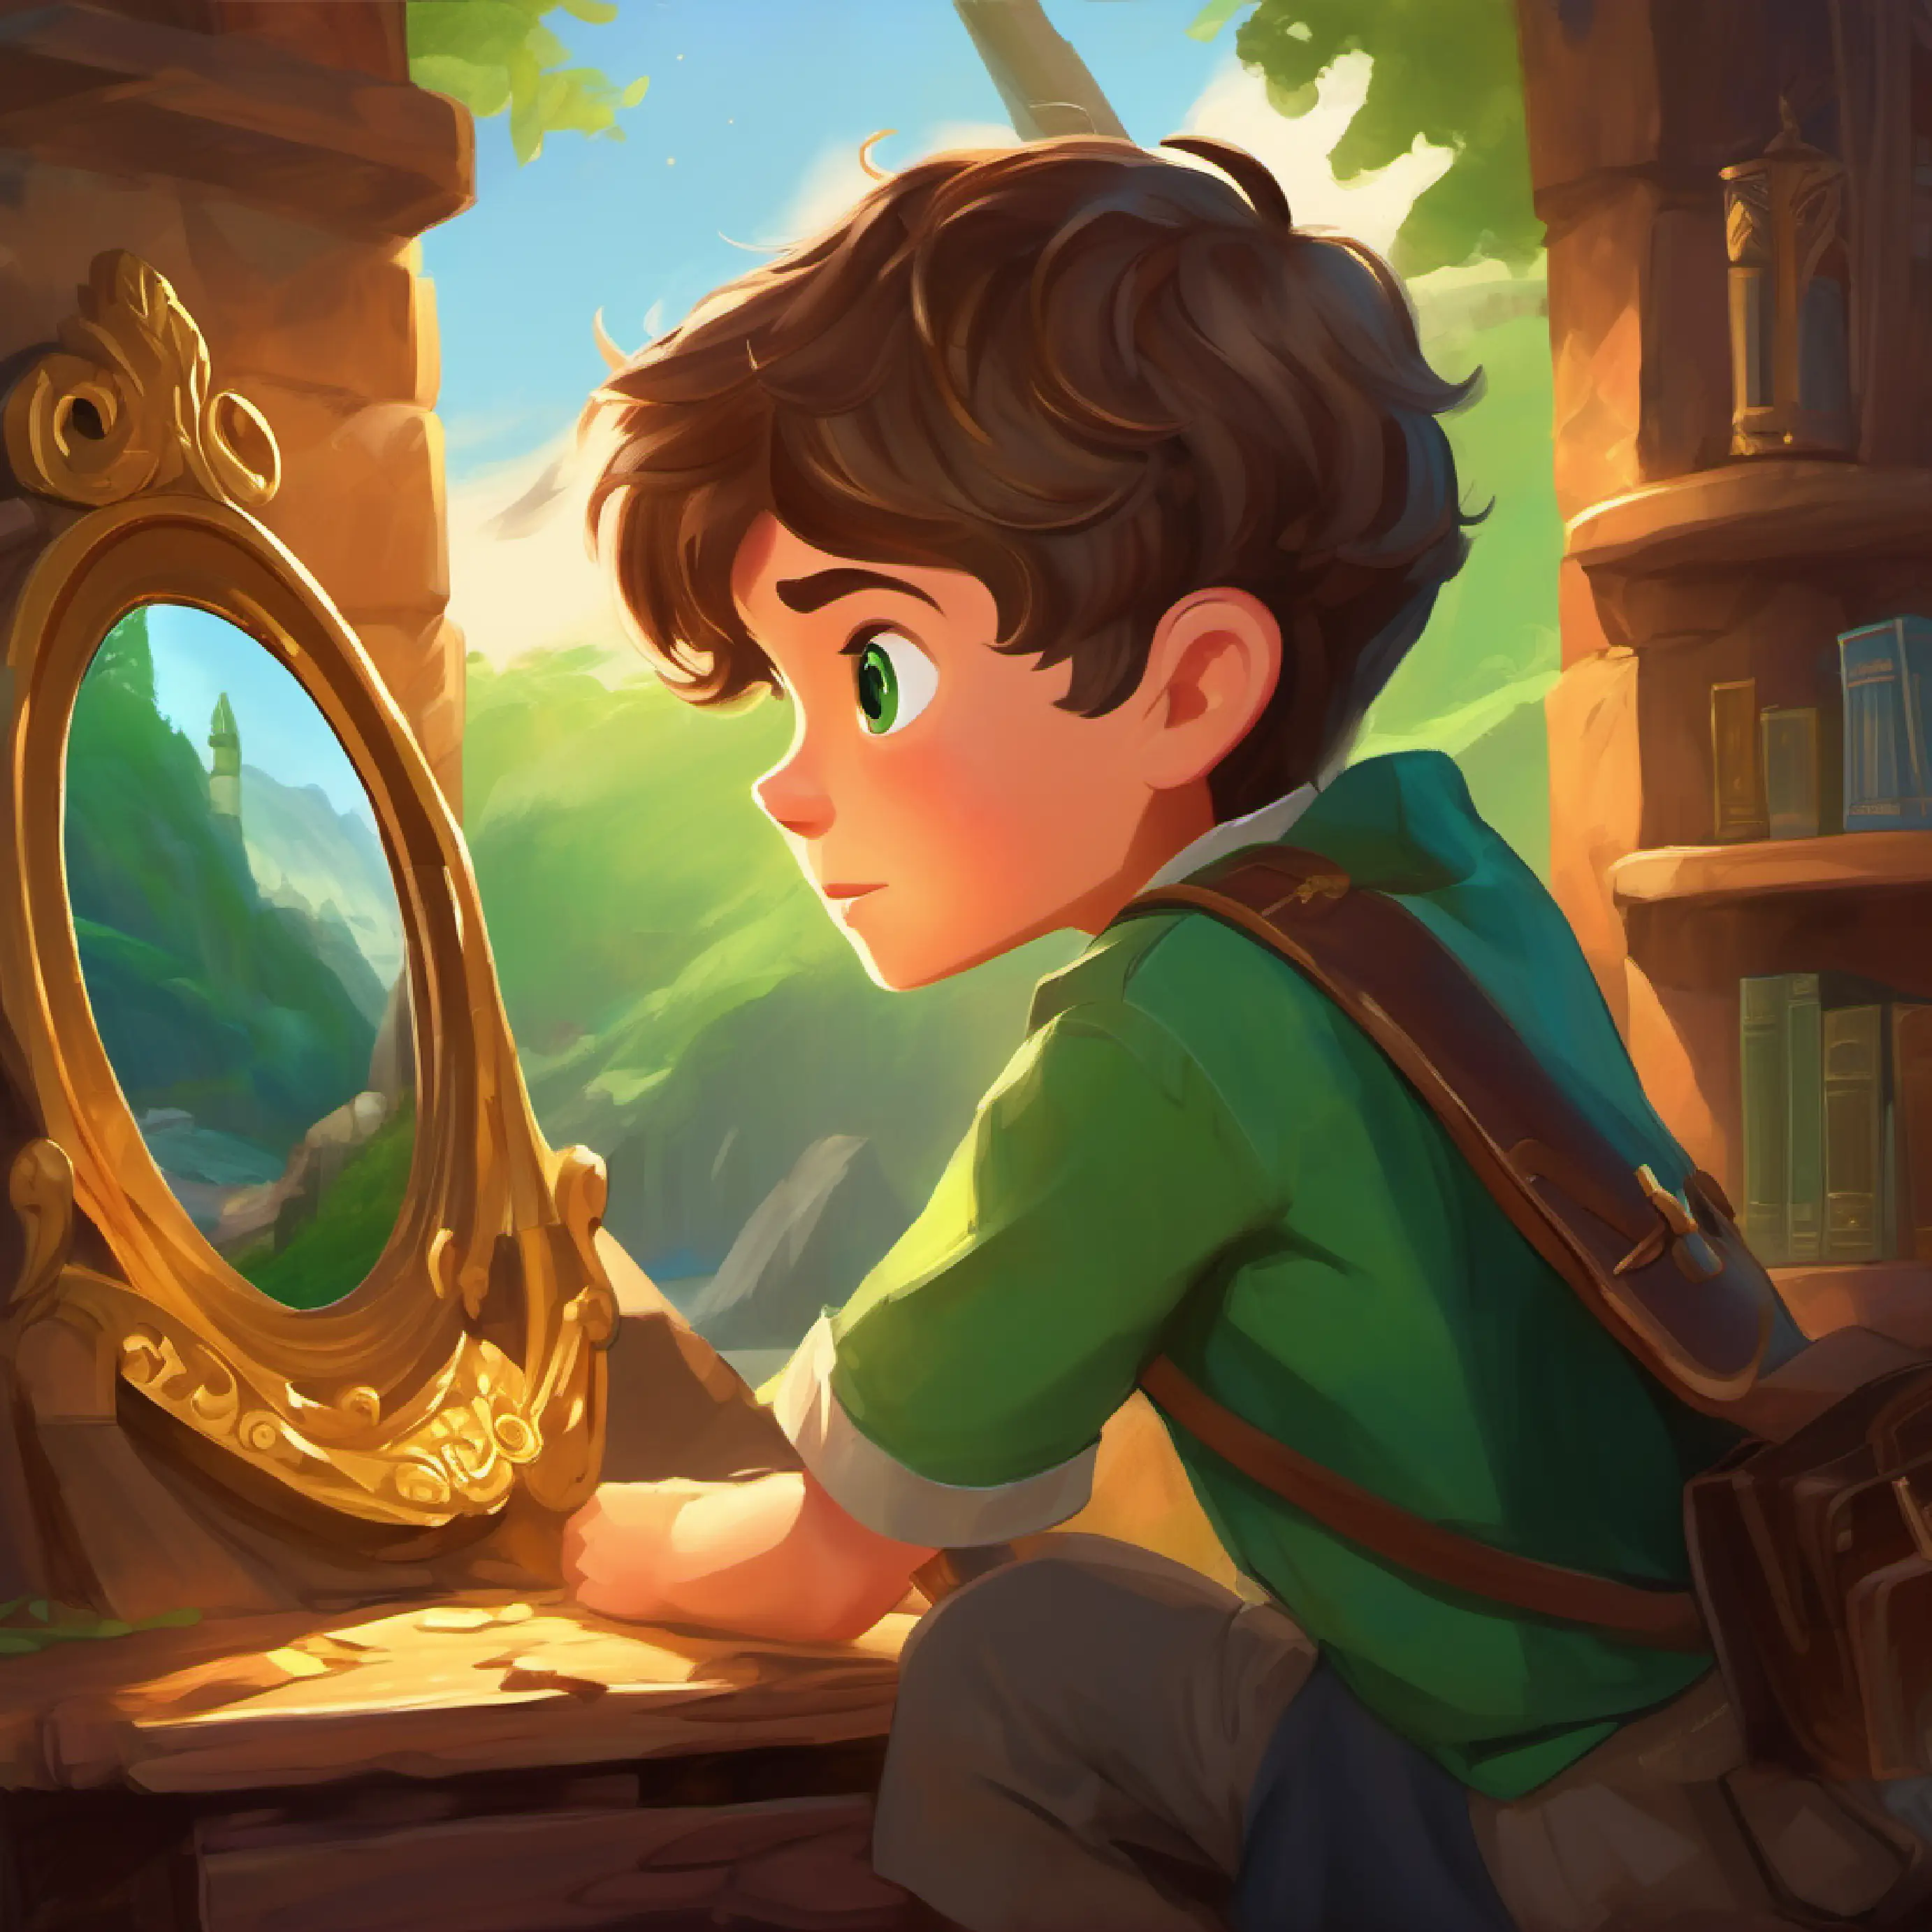 Treasure found revealing a mirror, Curious boy, short brown hair, green eyes, adventurous spirit recognized as brave